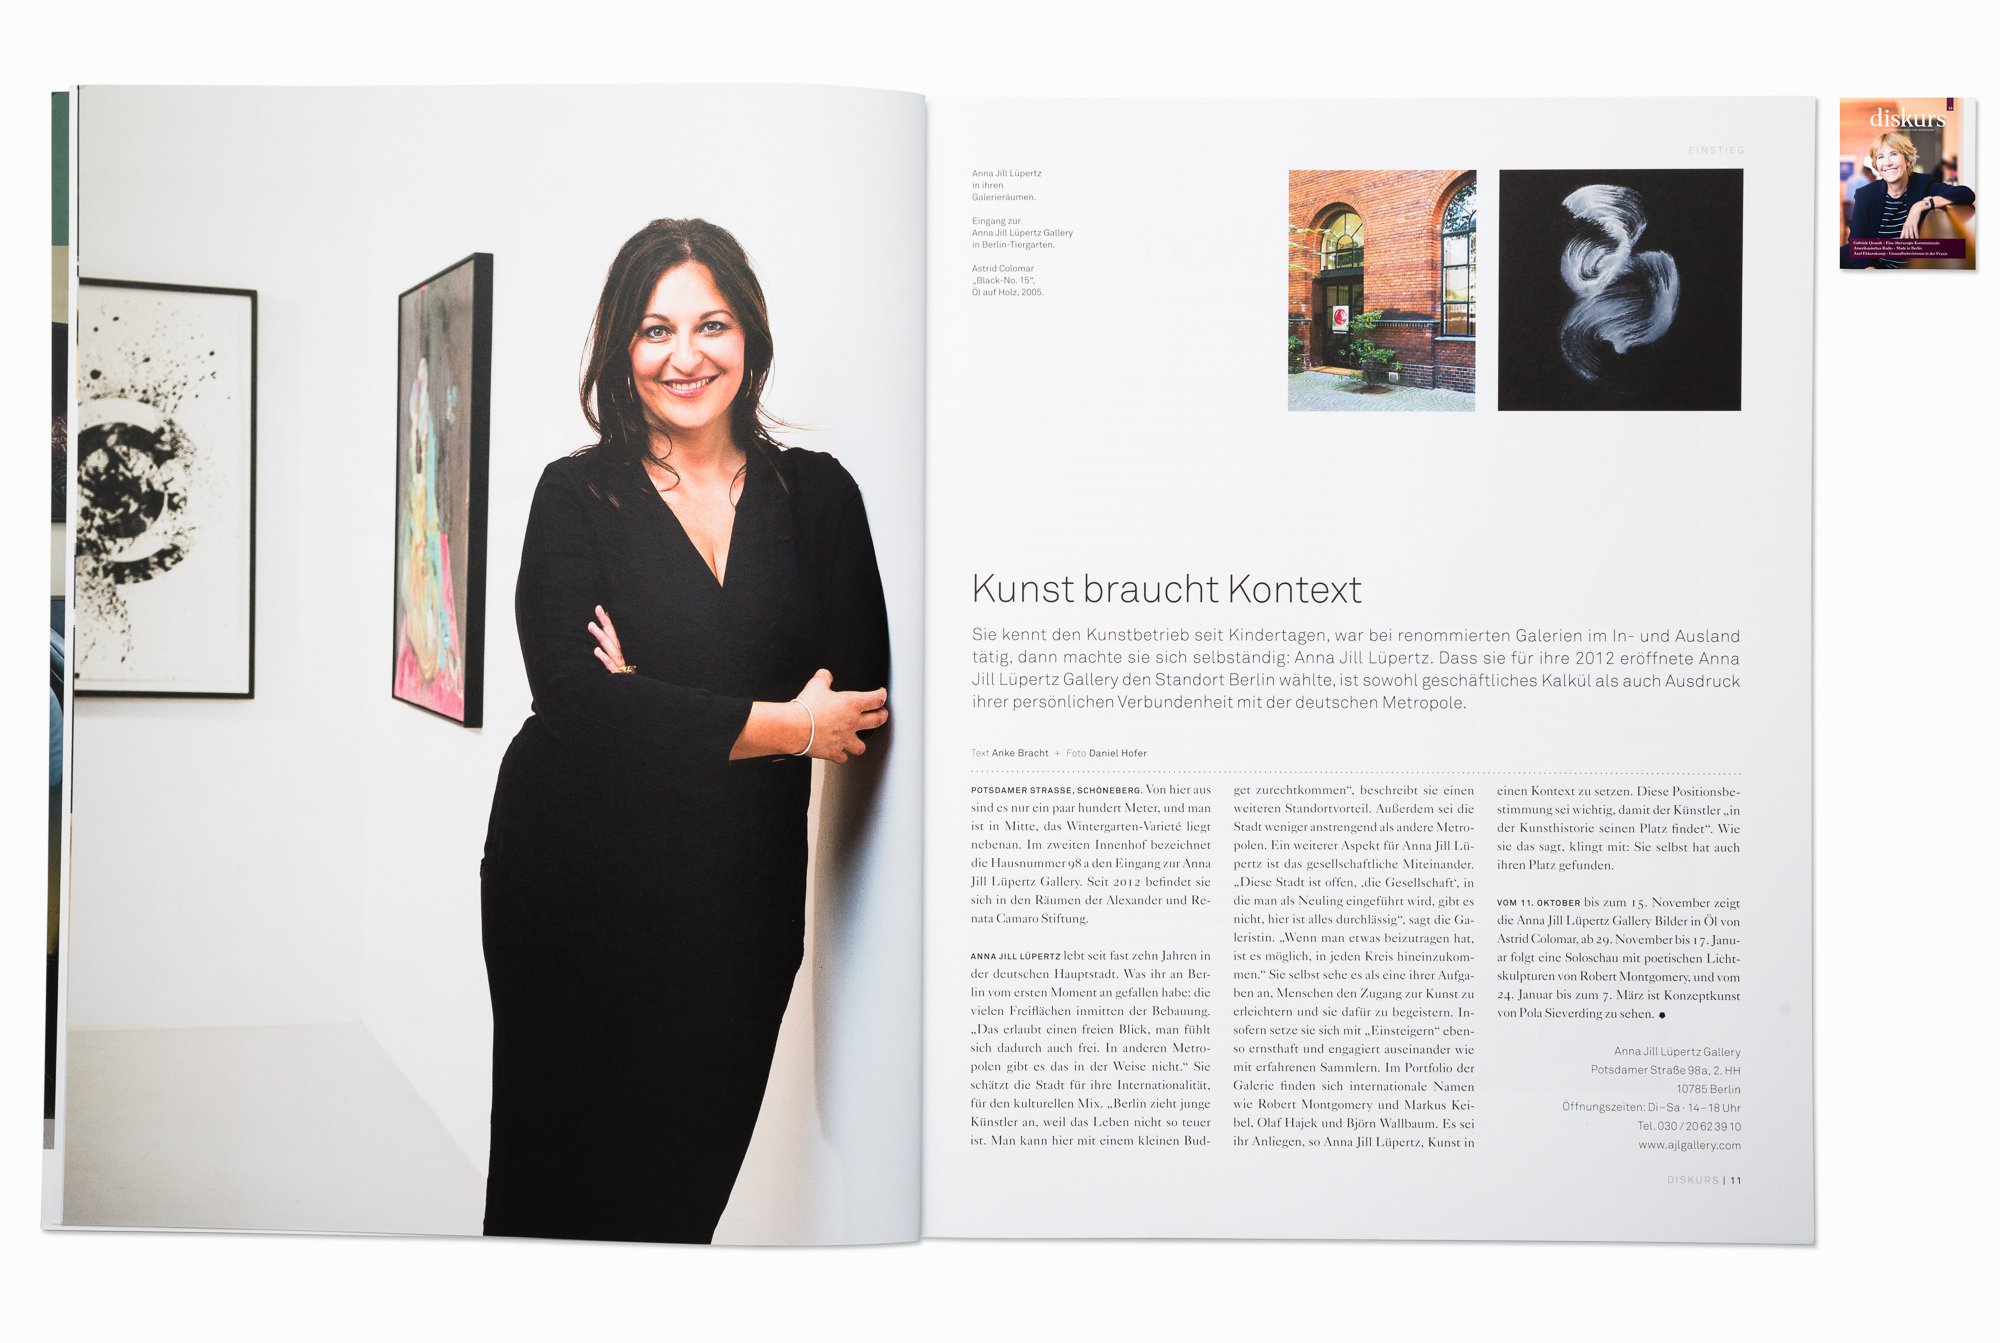   Gallery owner Anna Jill Luepertz for Diskurs magazine, Berlin 2014  